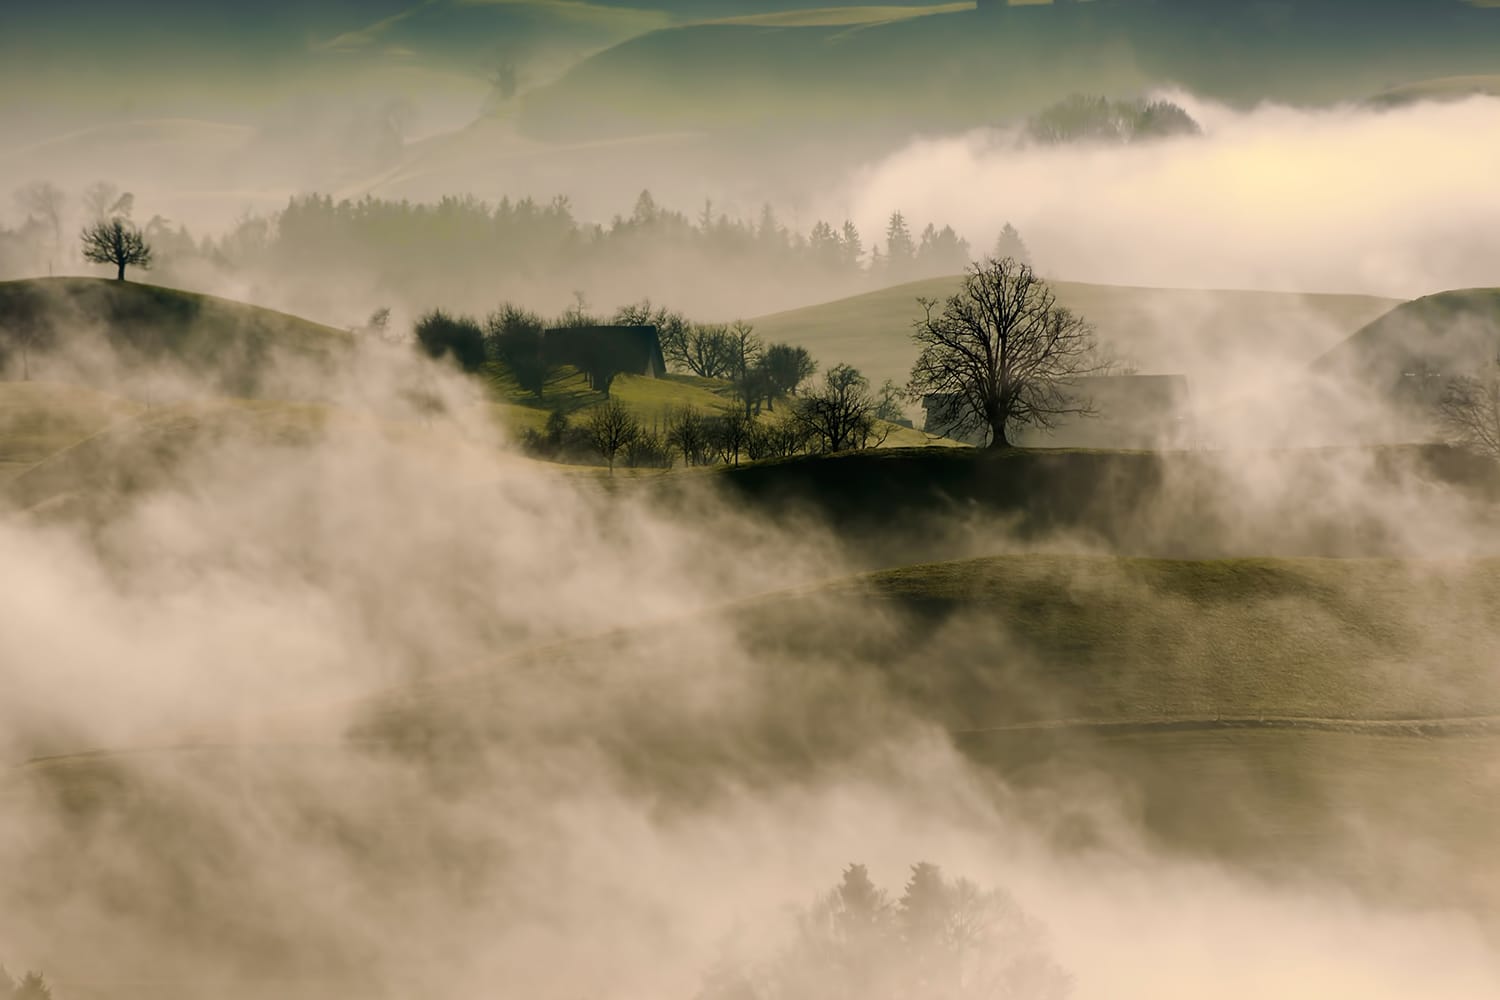 Capturing Amazing Photos of Mist and Fog